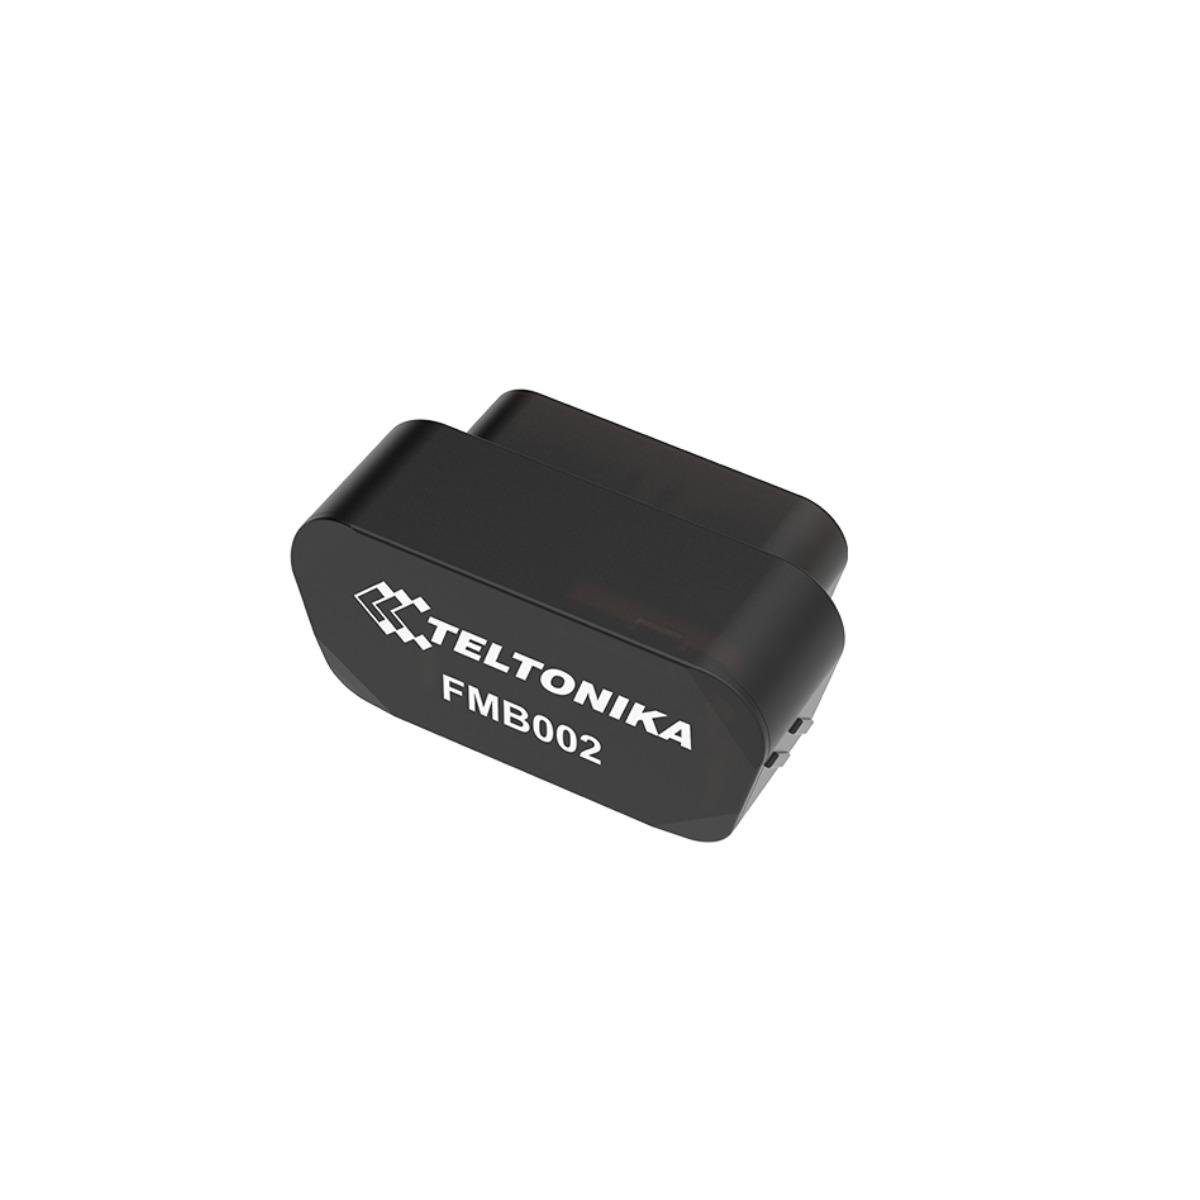 Teltonika FMB002 - Kleiner OBD-Tracker GPS-Tracker